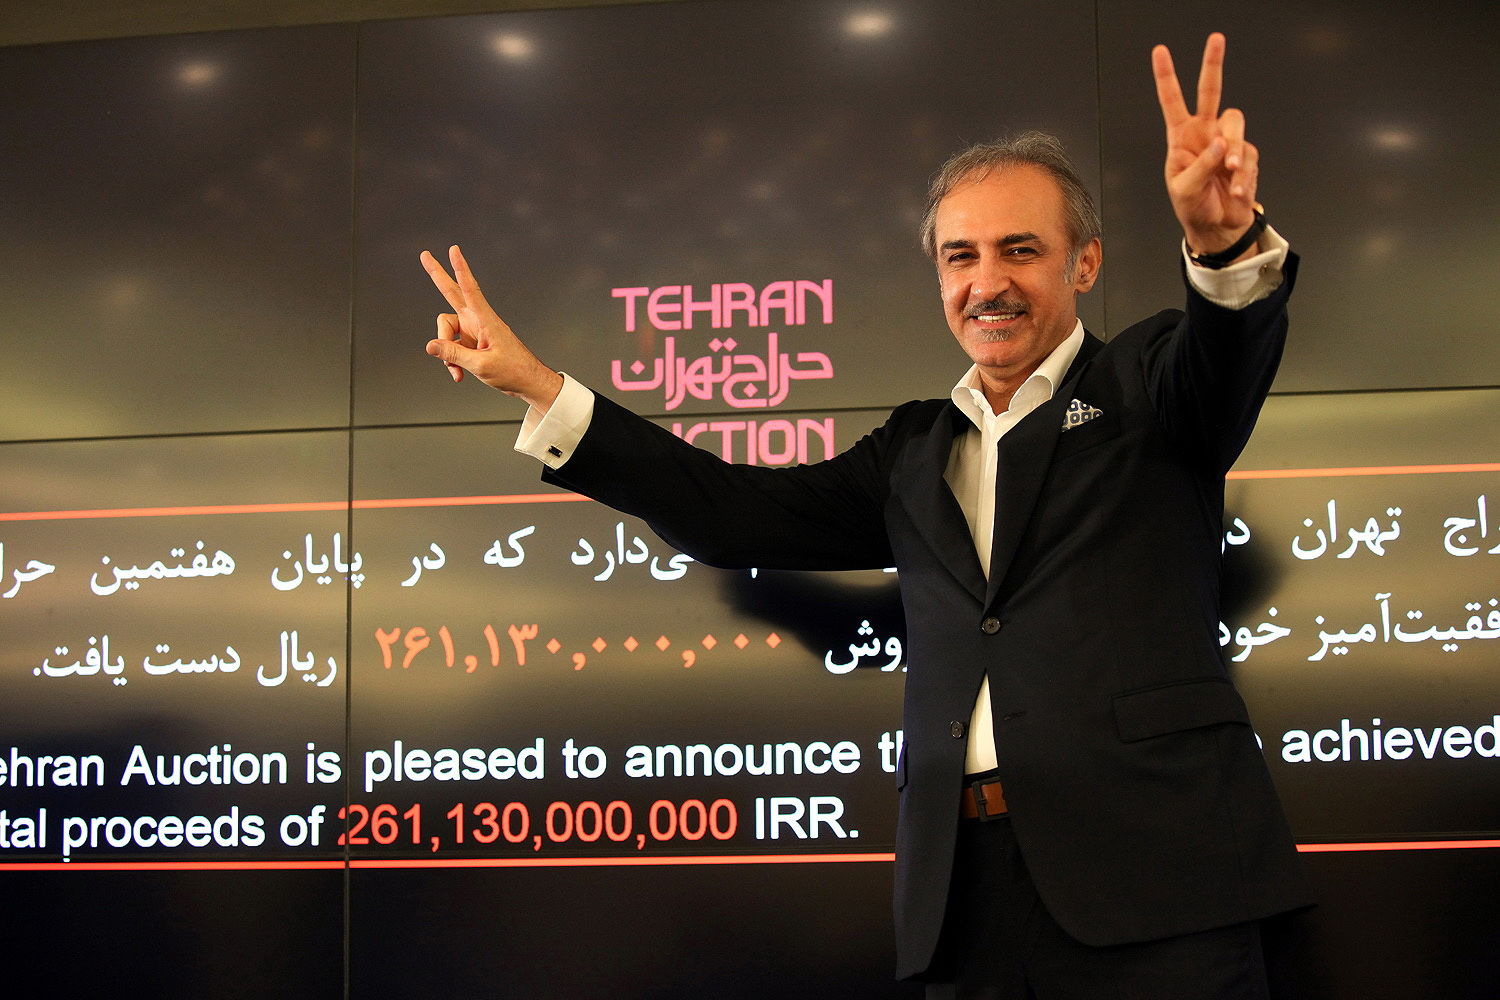 Tehran Auction 2017 breaks record – again

